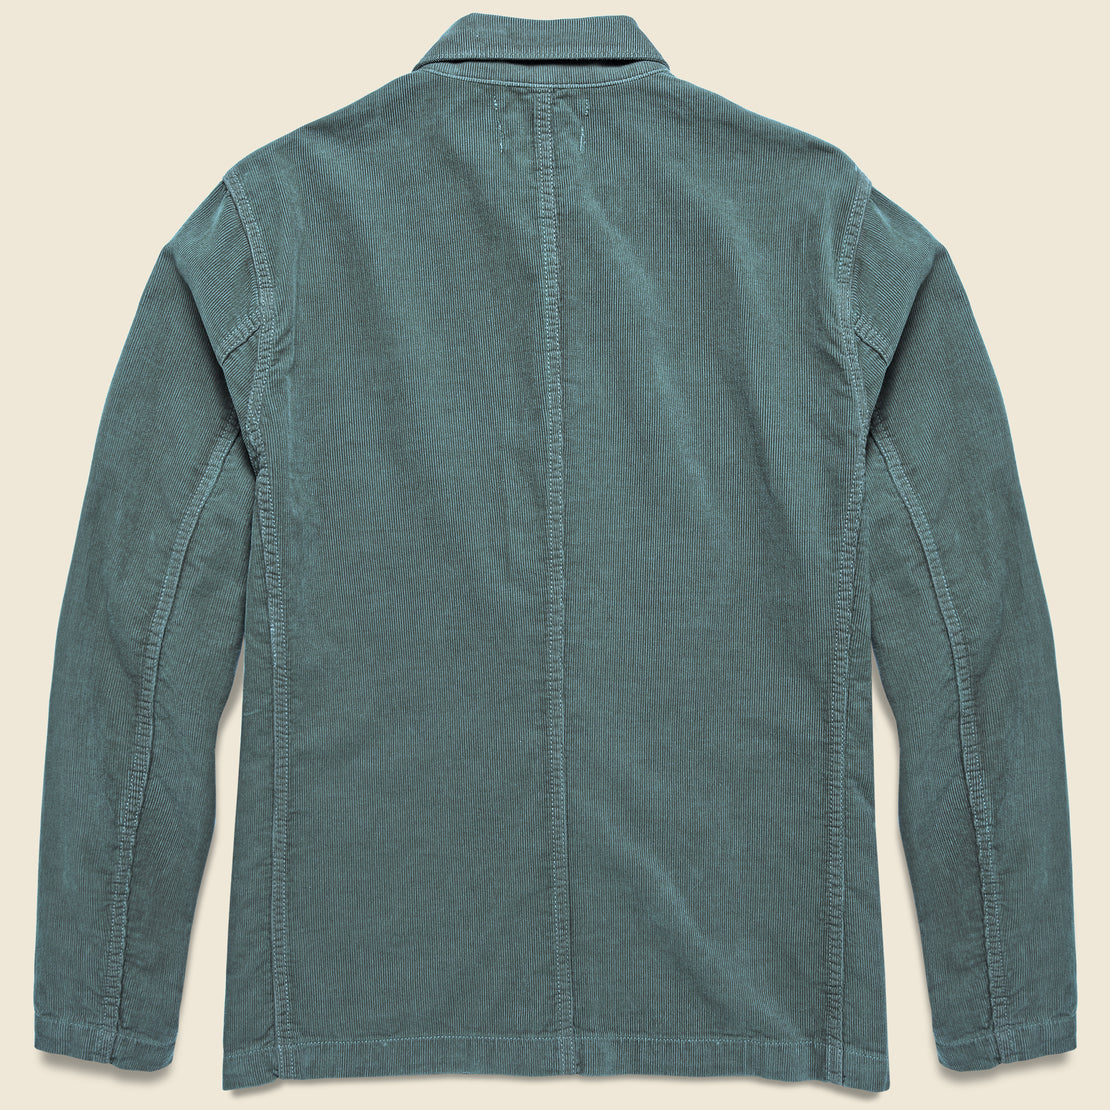 Fine Corduroy Work Jacket  - Dark Spruce - Alex Mill - STAG Provisions - Outerwear - Coat / Jacket